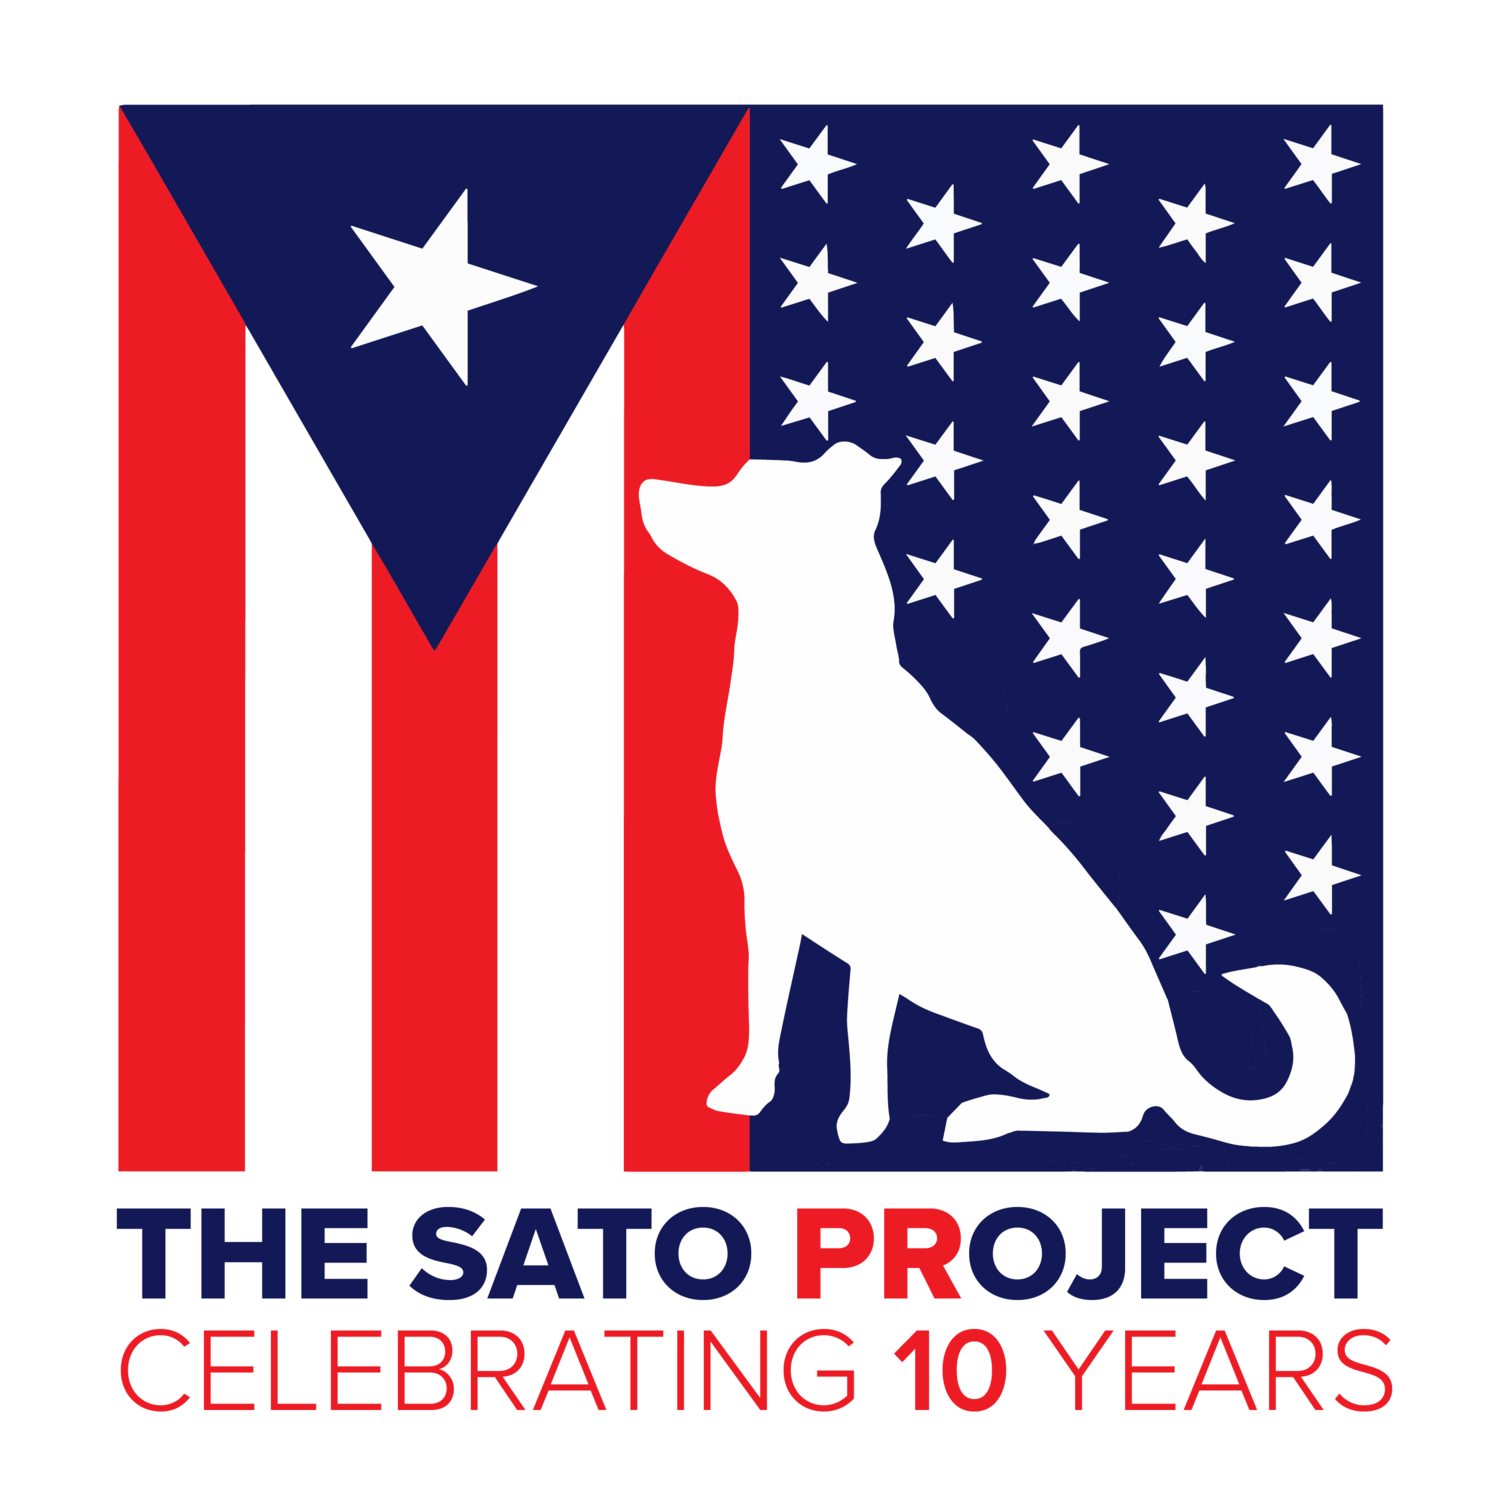 The Sato Project